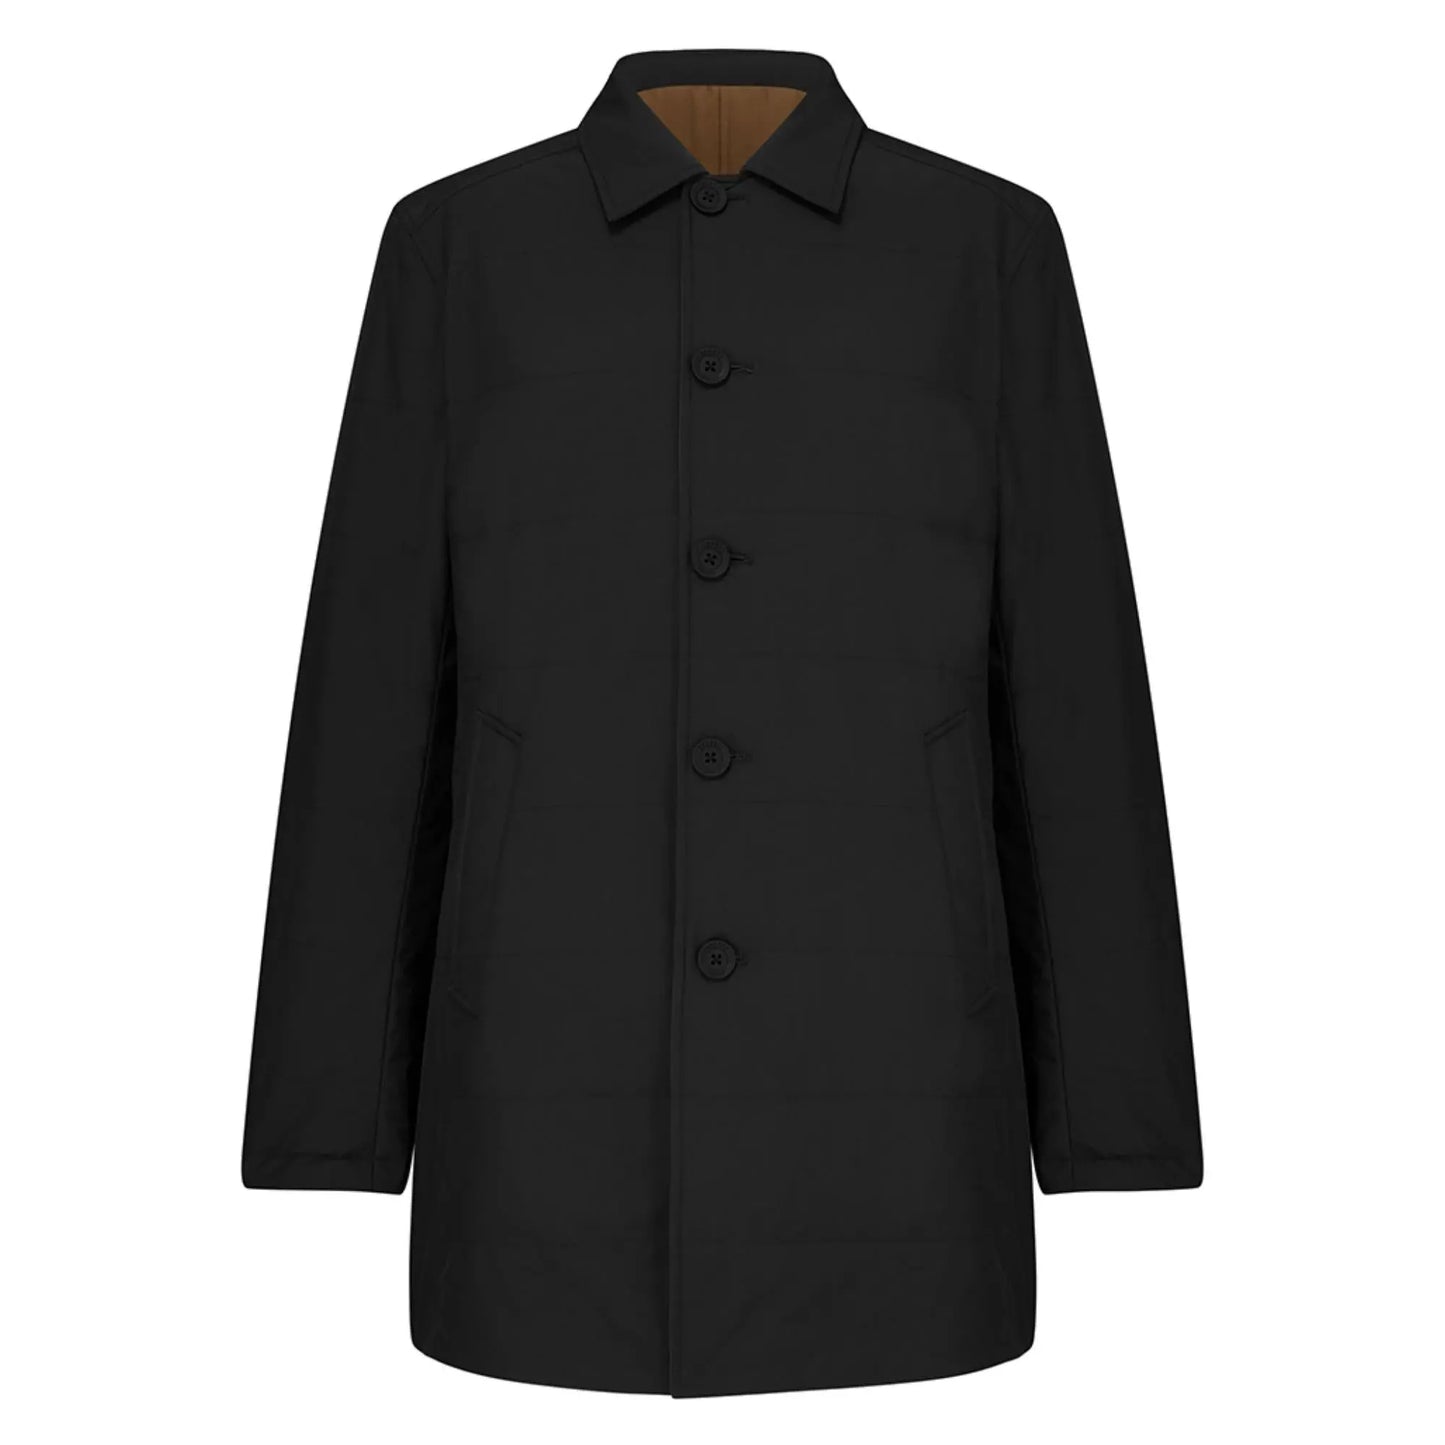 Buy Guards London Monte2 Jacket  - Tan/Black | Coatss at Woven Durham